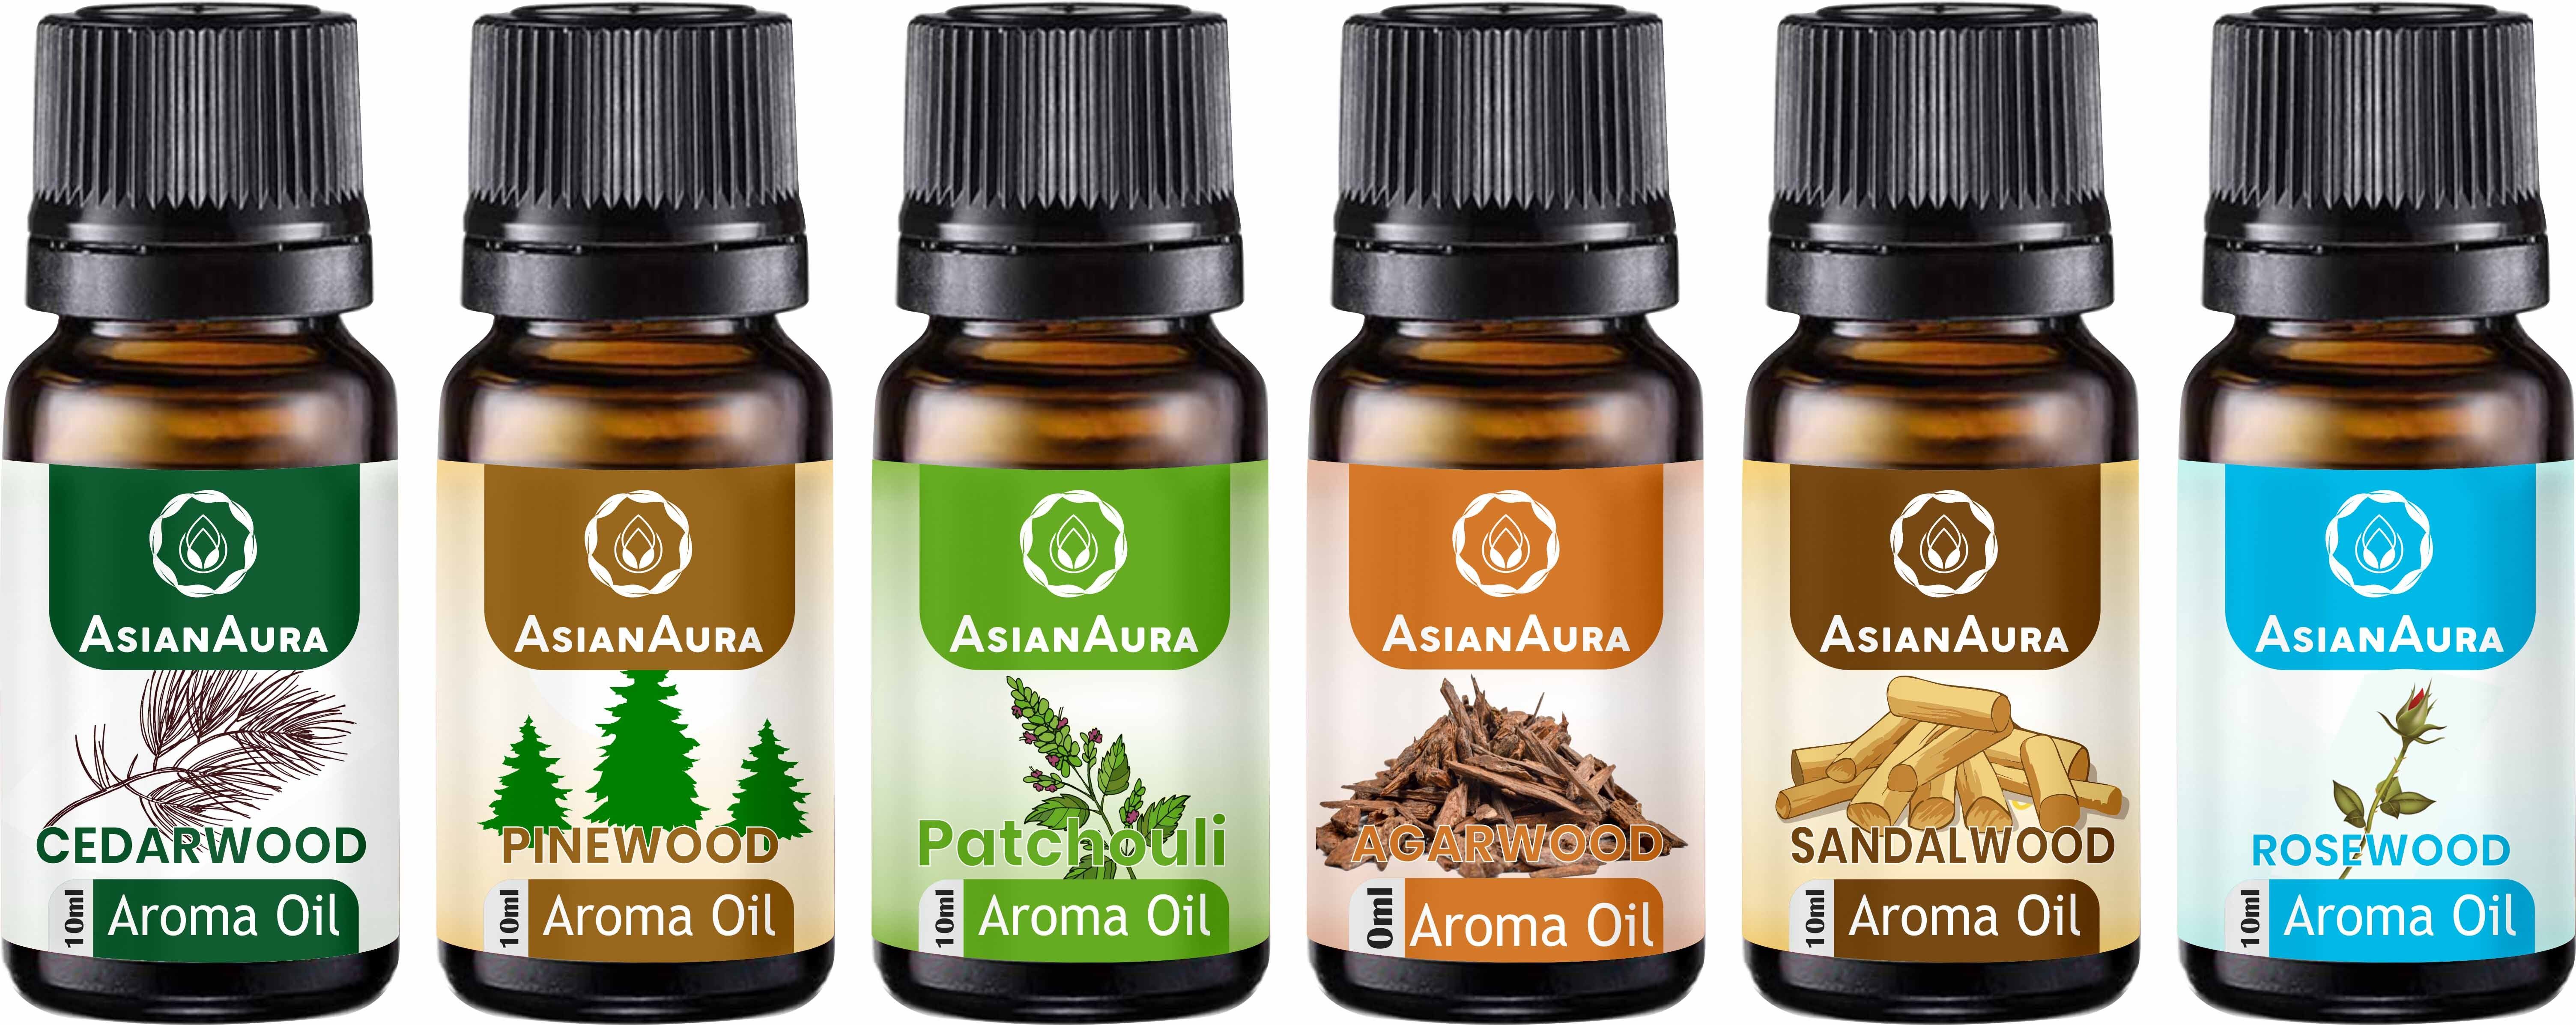 Asian Aura woody combo 10ml Aroma oil Set of 6